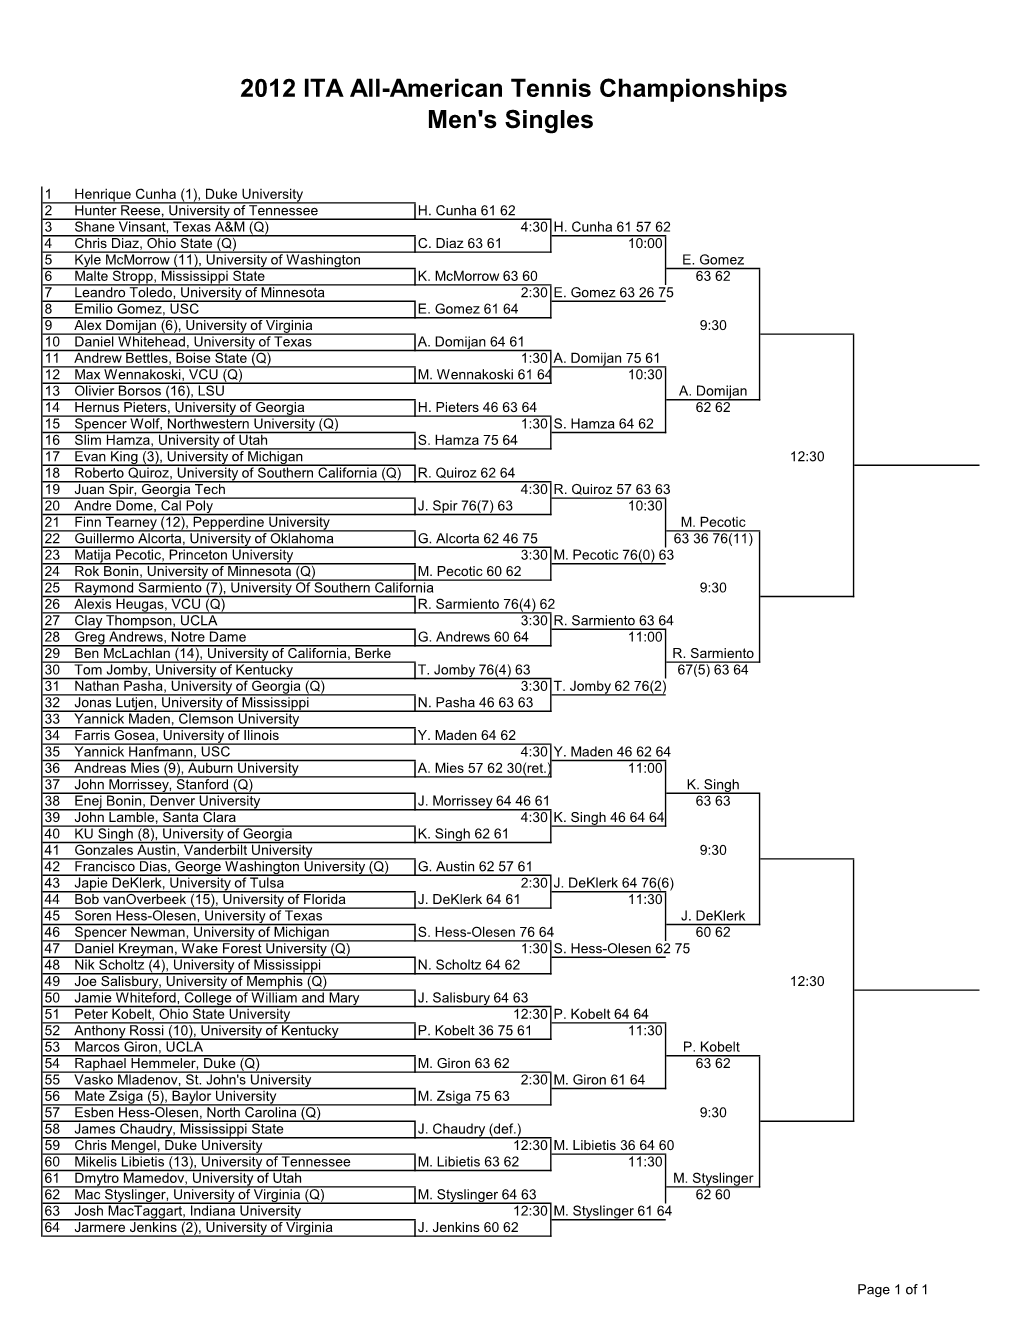 2012 ITA All-American Tennis Championships Men's Singles